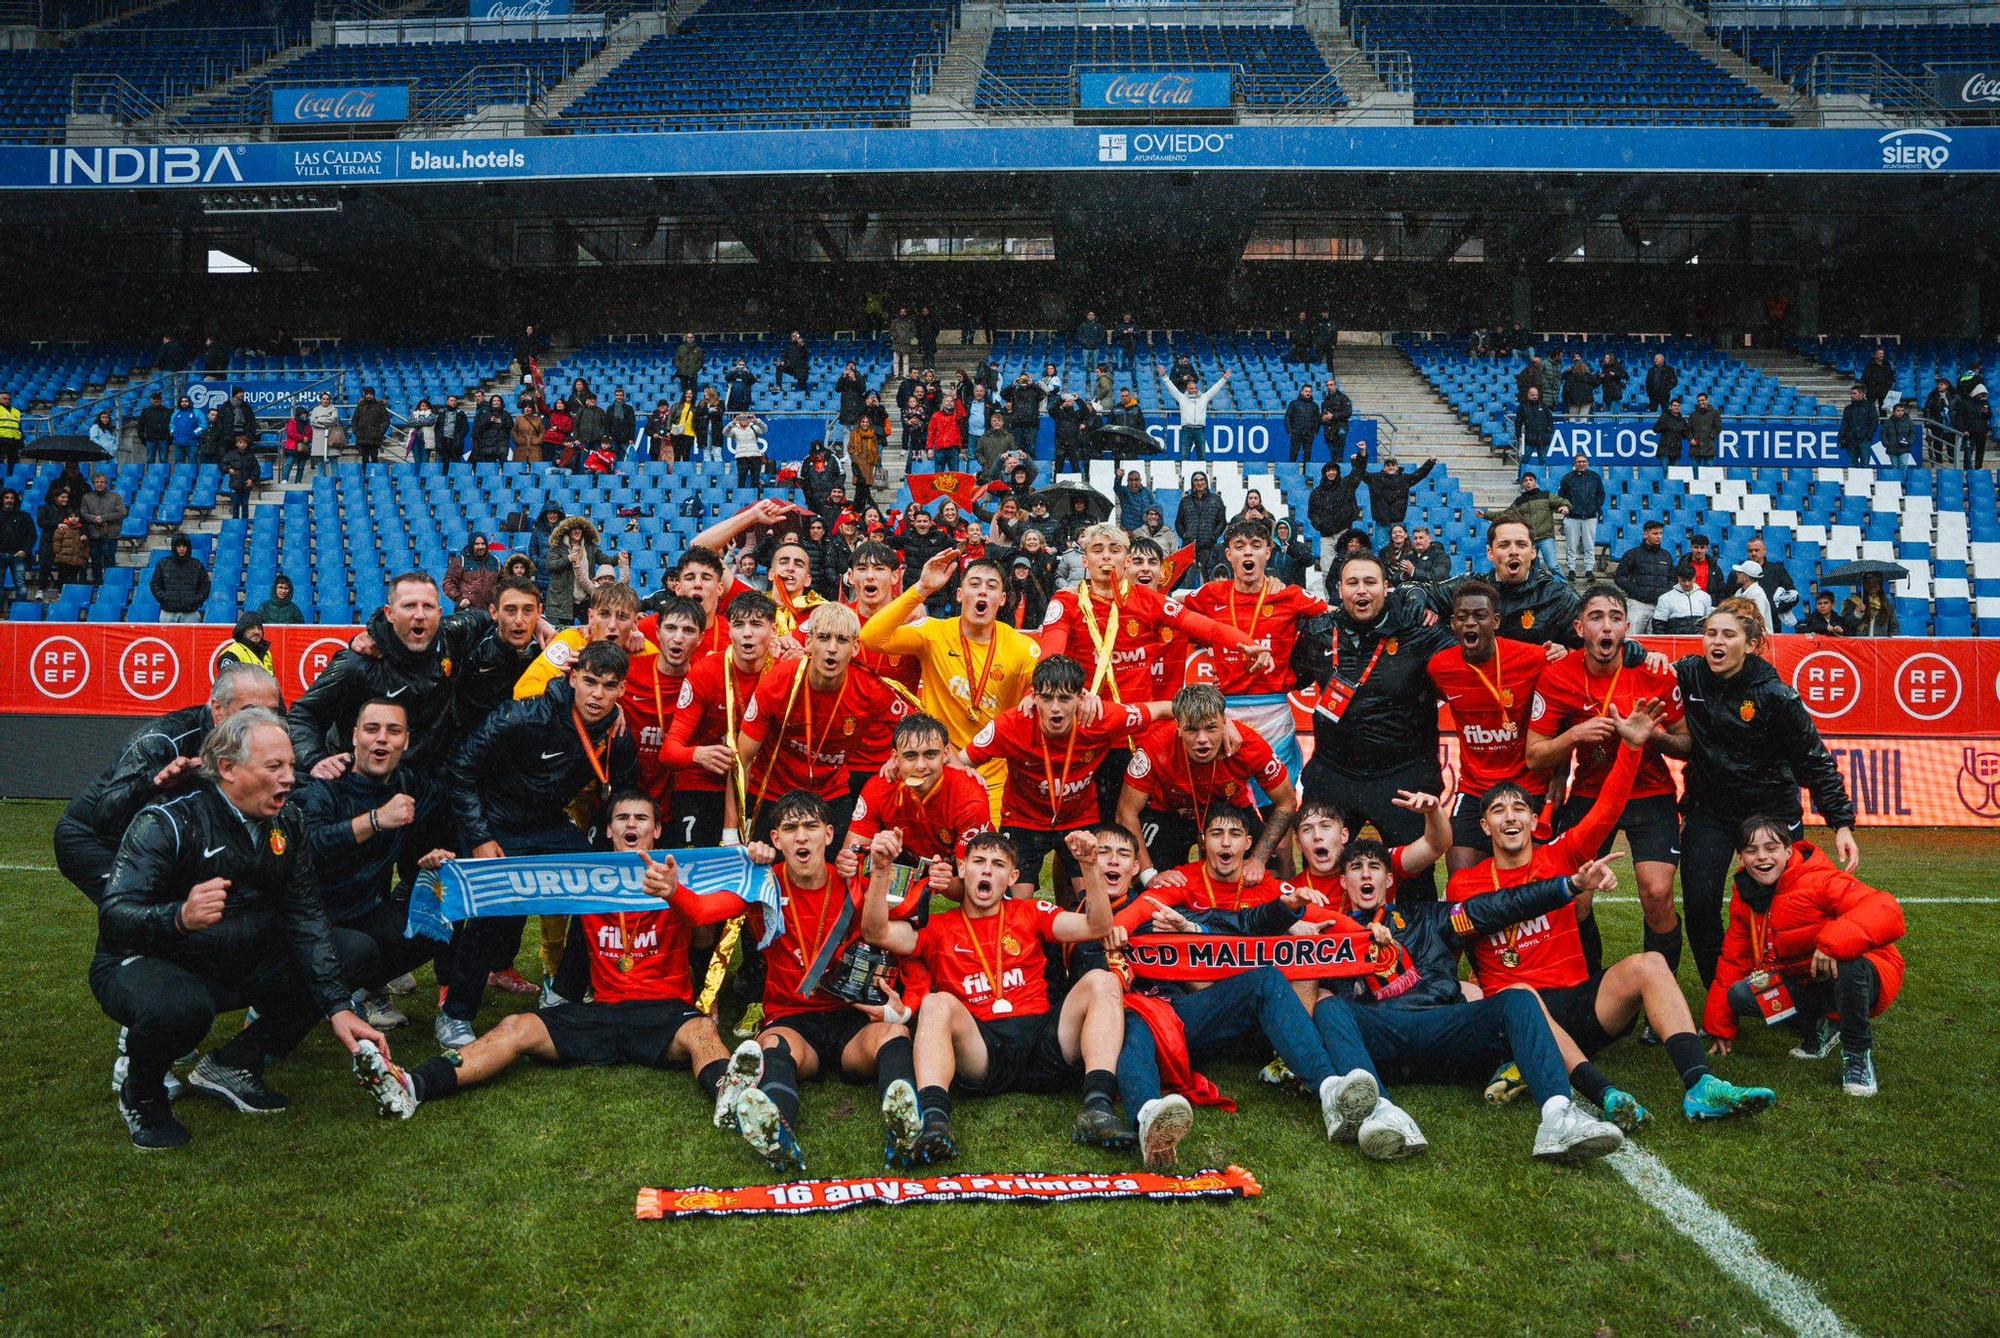 RCD Espanyol-RCD Mallorca, las imágenes de la Copa del Rey juvenil